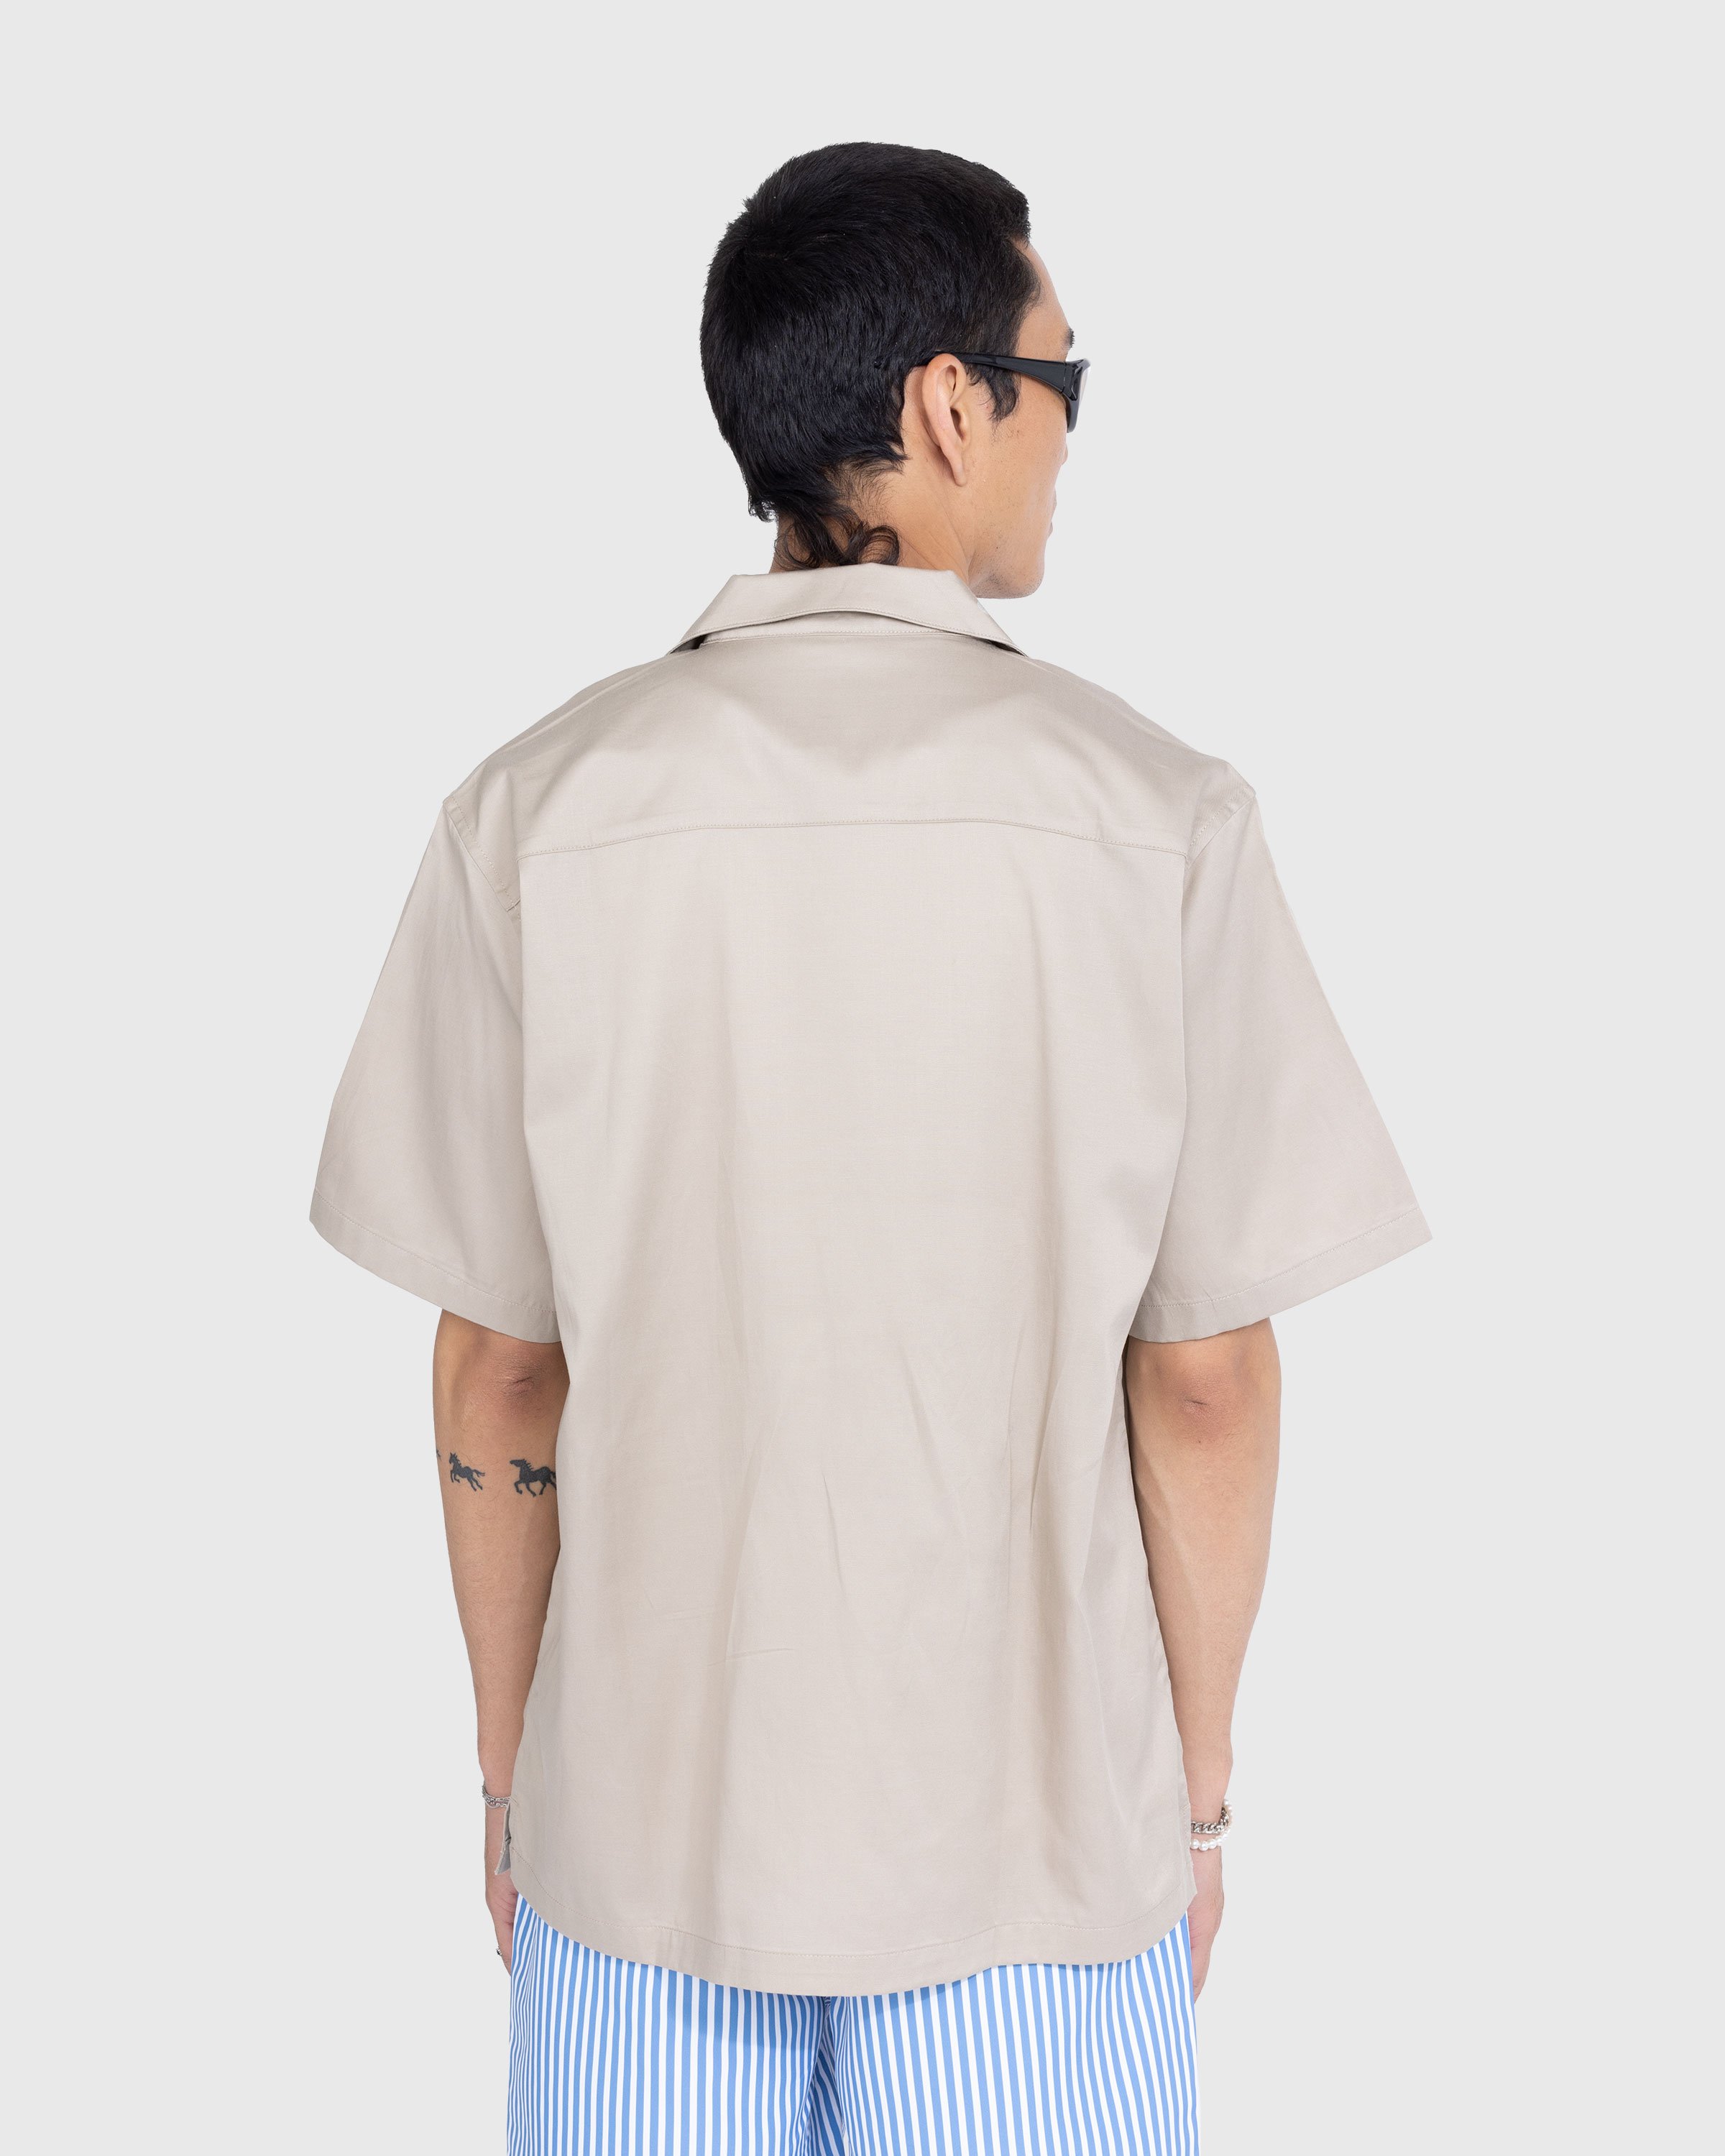 Carhartt WIP - Delray Shirt Wall/Wax - Clothing - Beige - Image 3